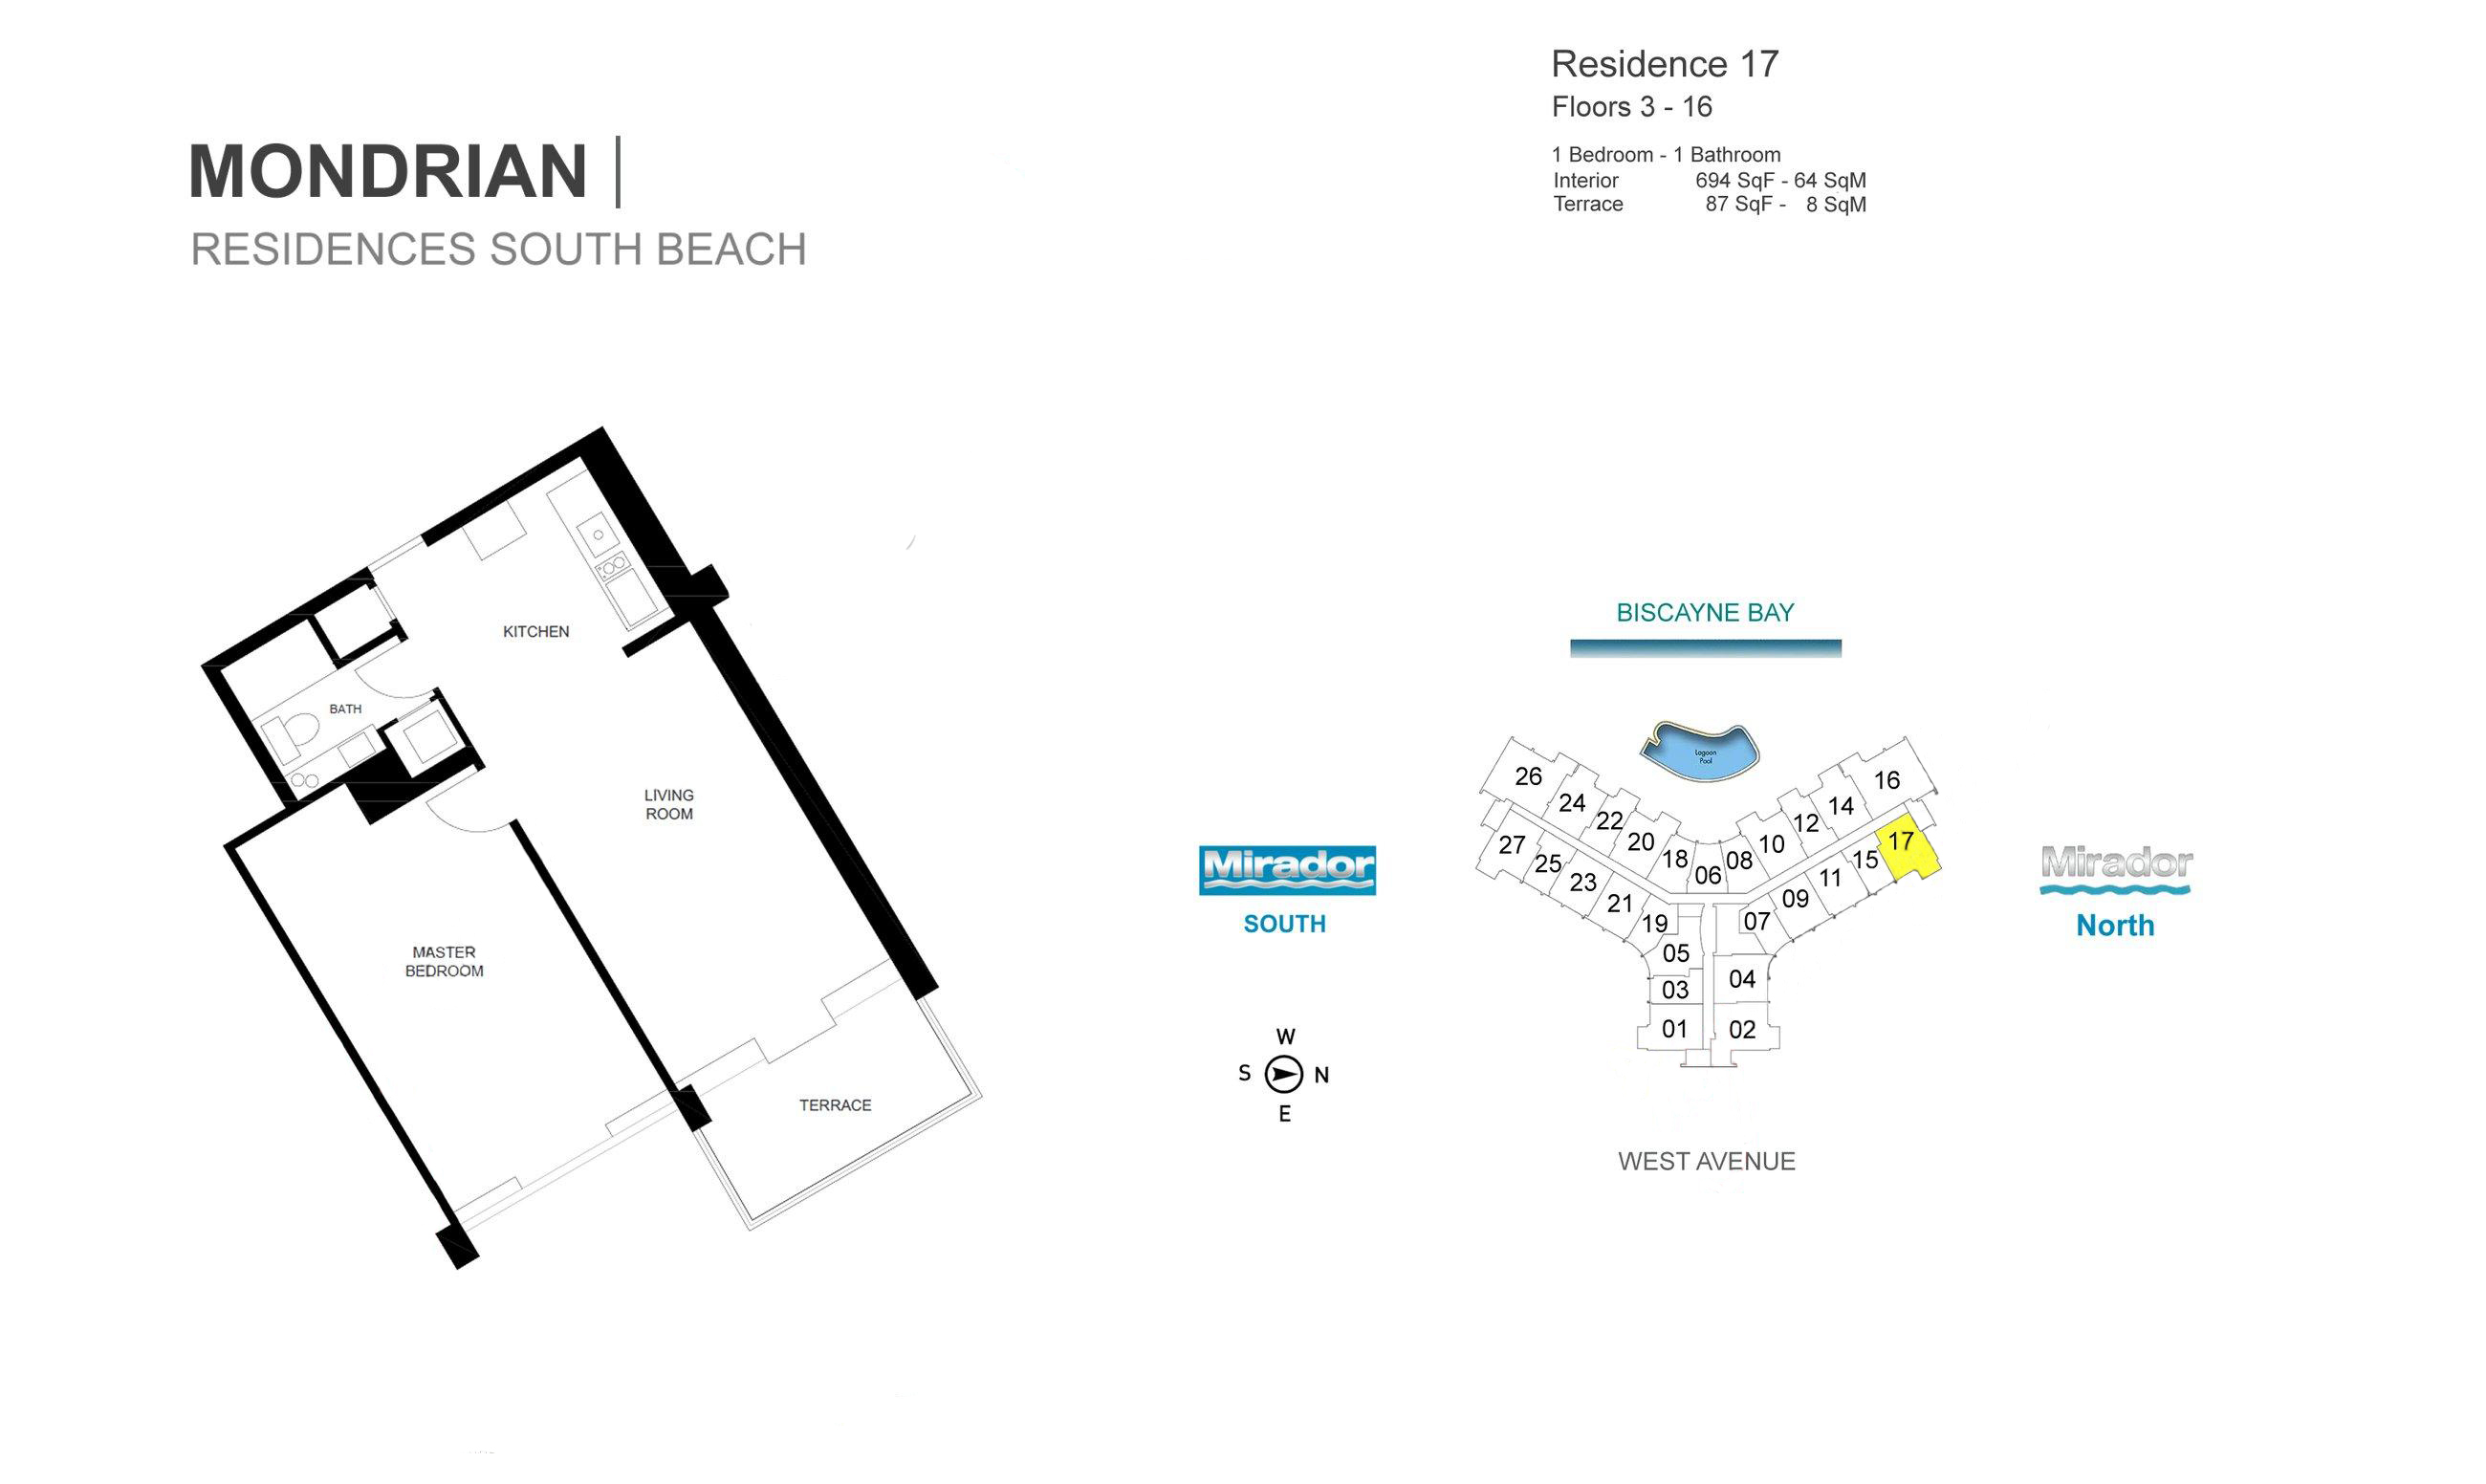 Mondrian South Beach Residence 17